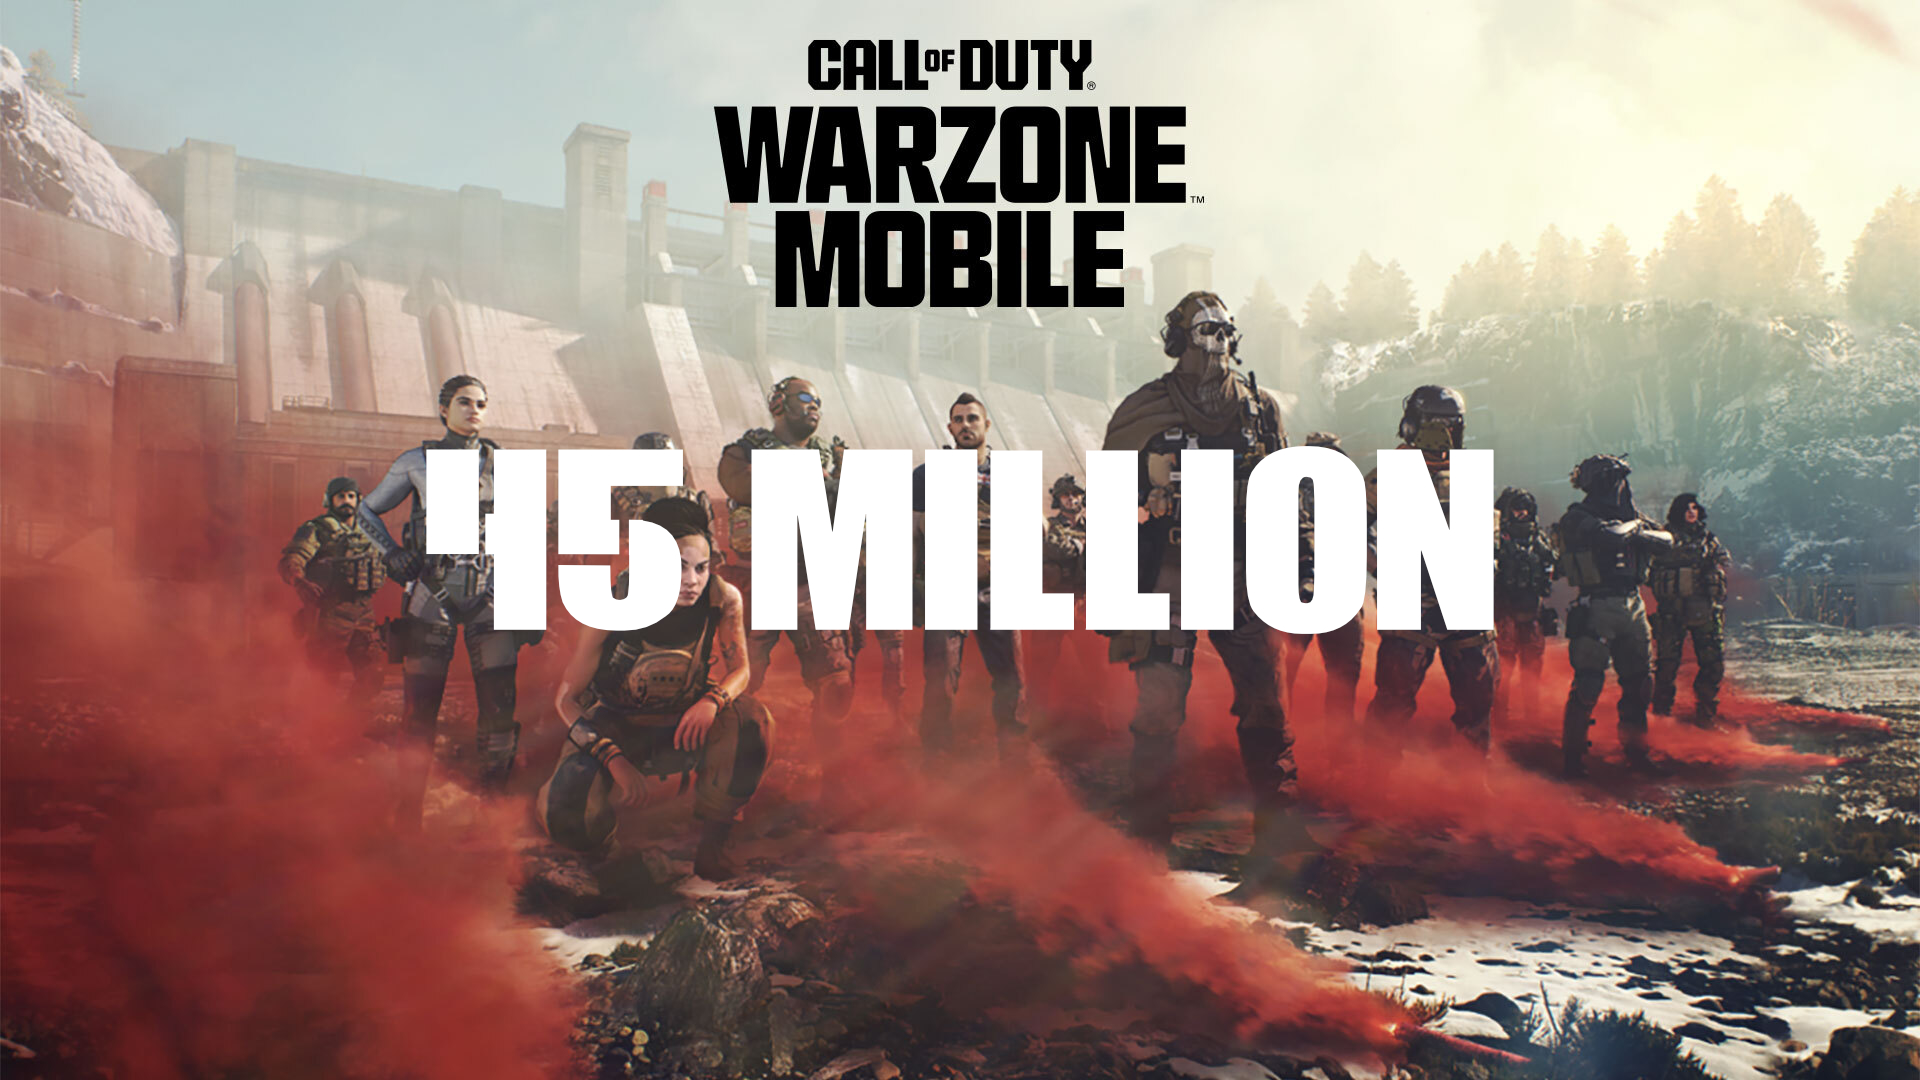 Call of Duty®: Mobile Surpasses 500 Million Downloads